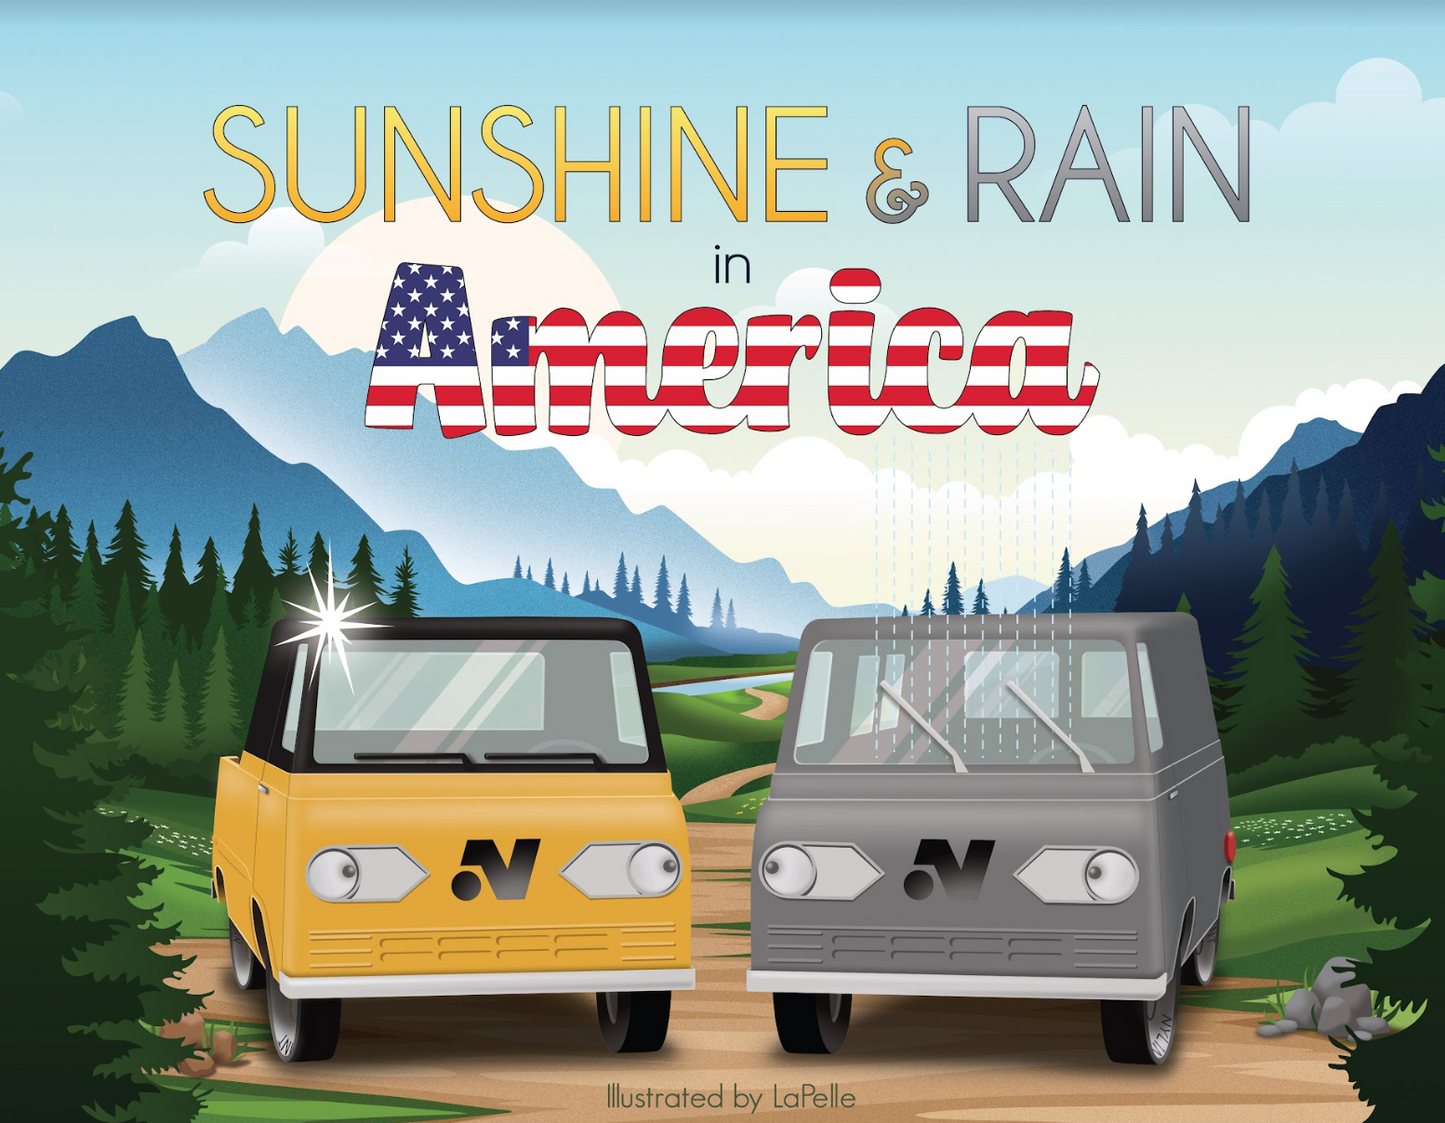 Sunshine, Rain, and Nylint Book Bundle!